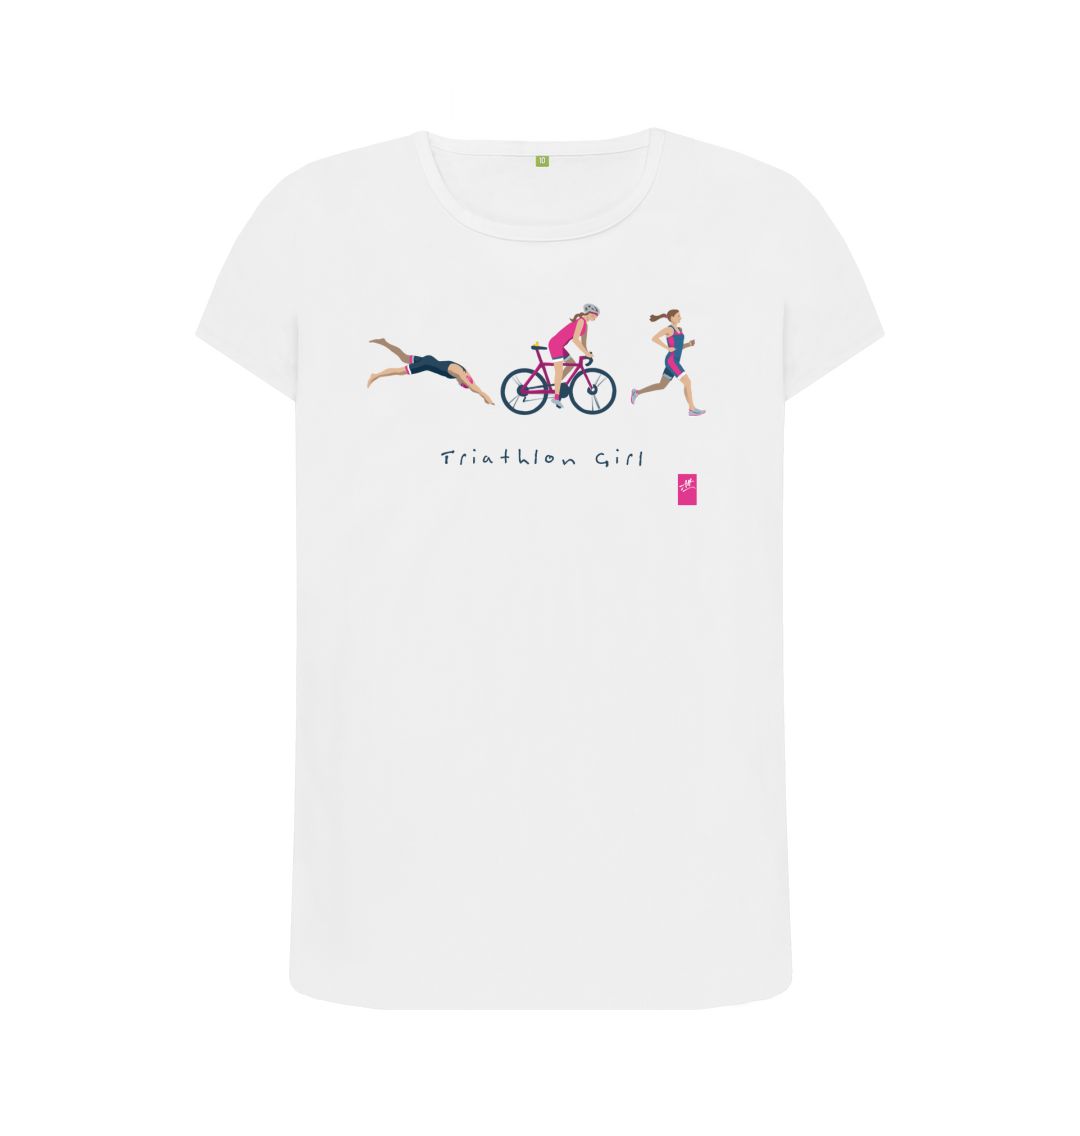 White Triathlon Girl t-shirt \u2013 women's fit